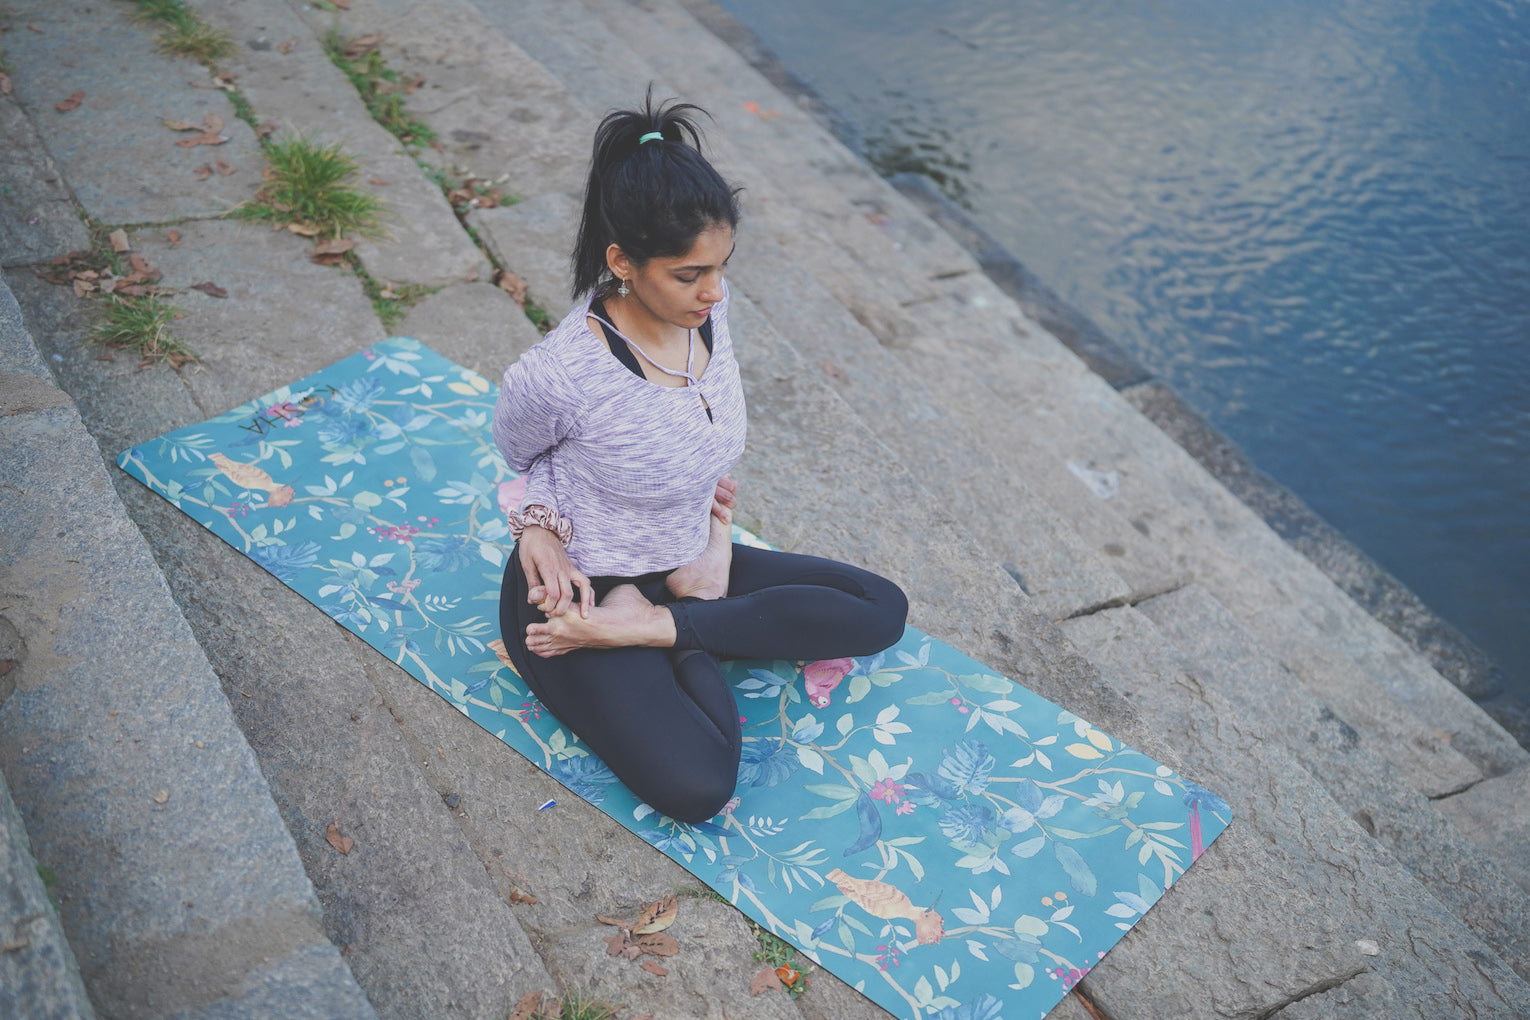 Yuilgdo Yoga Towels, Non Slip Hot Yoga Mat Towel India